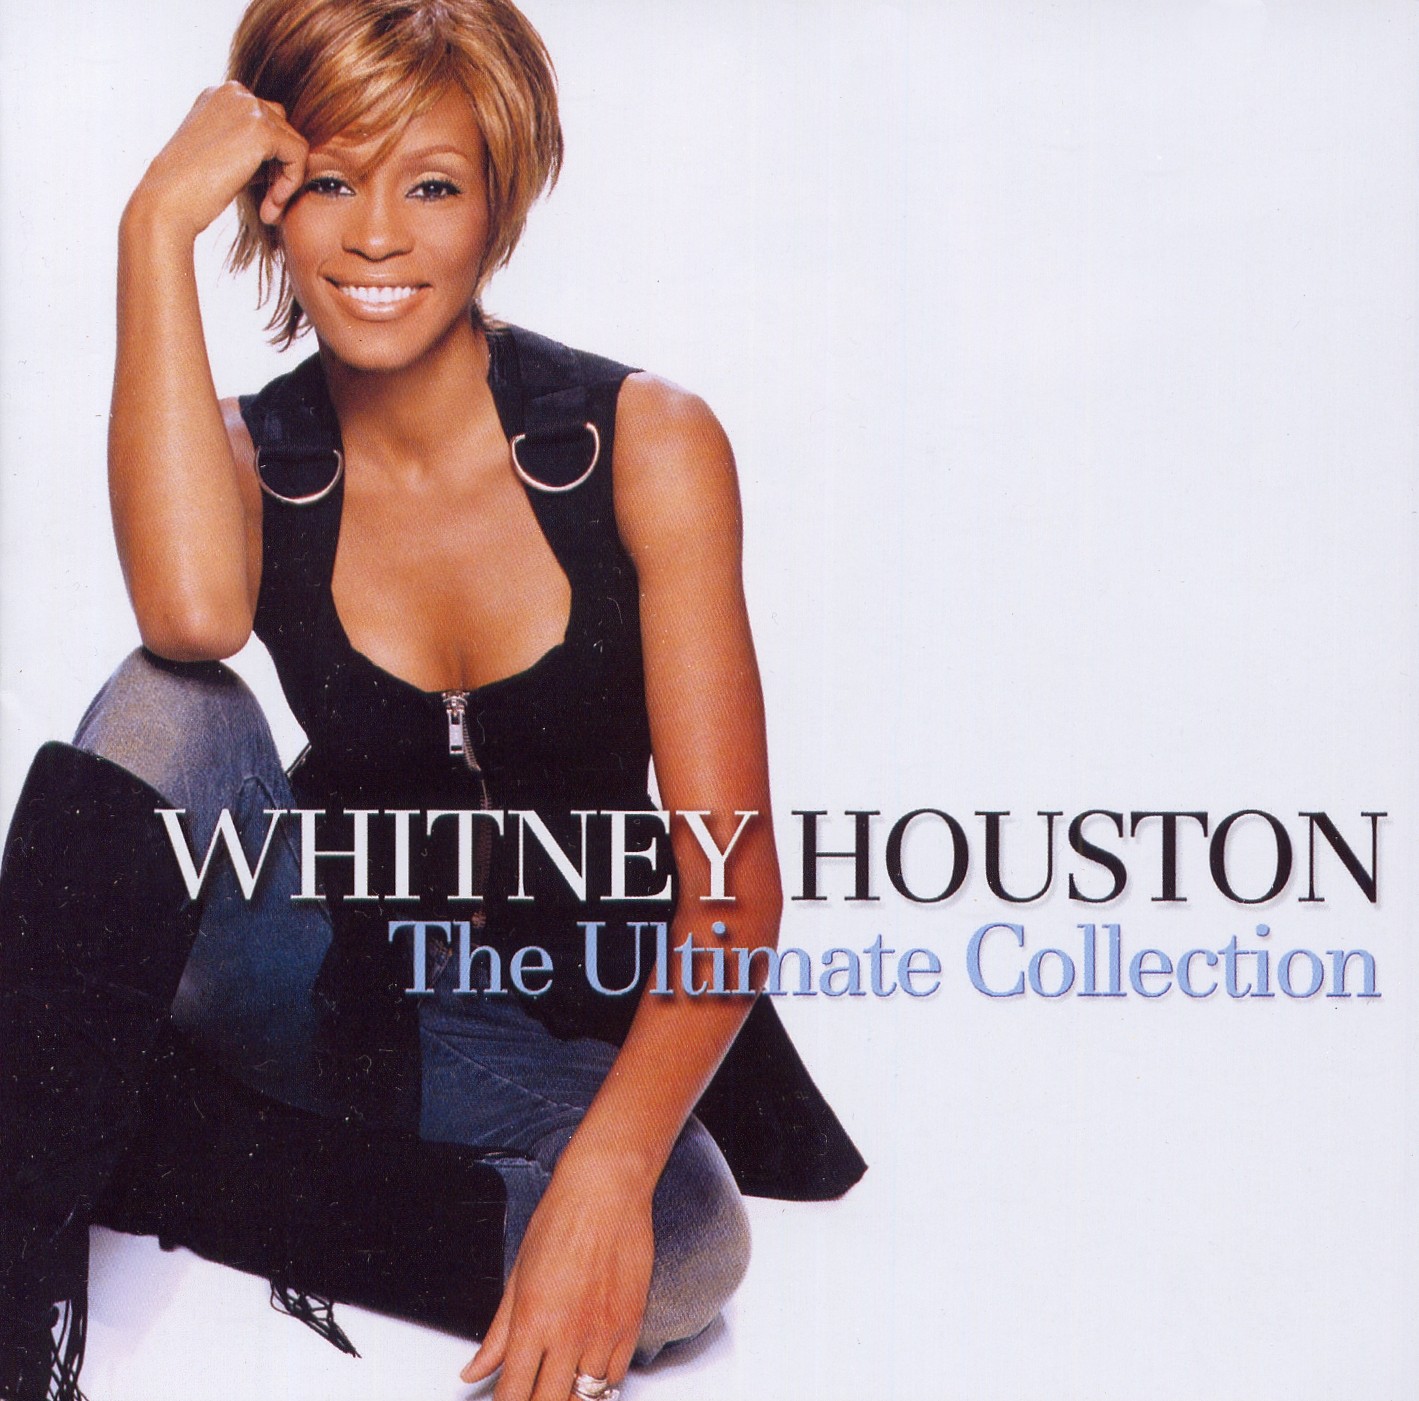 http://2.bp.blogspot.com/_p5rKvk3o25k/SckC47Ln3TI/AAAAAAAAAyw/iIomvnbwgYY/s1600/Whitney+Houston+-+The+Ultimate+Collection+-+Front.jpg